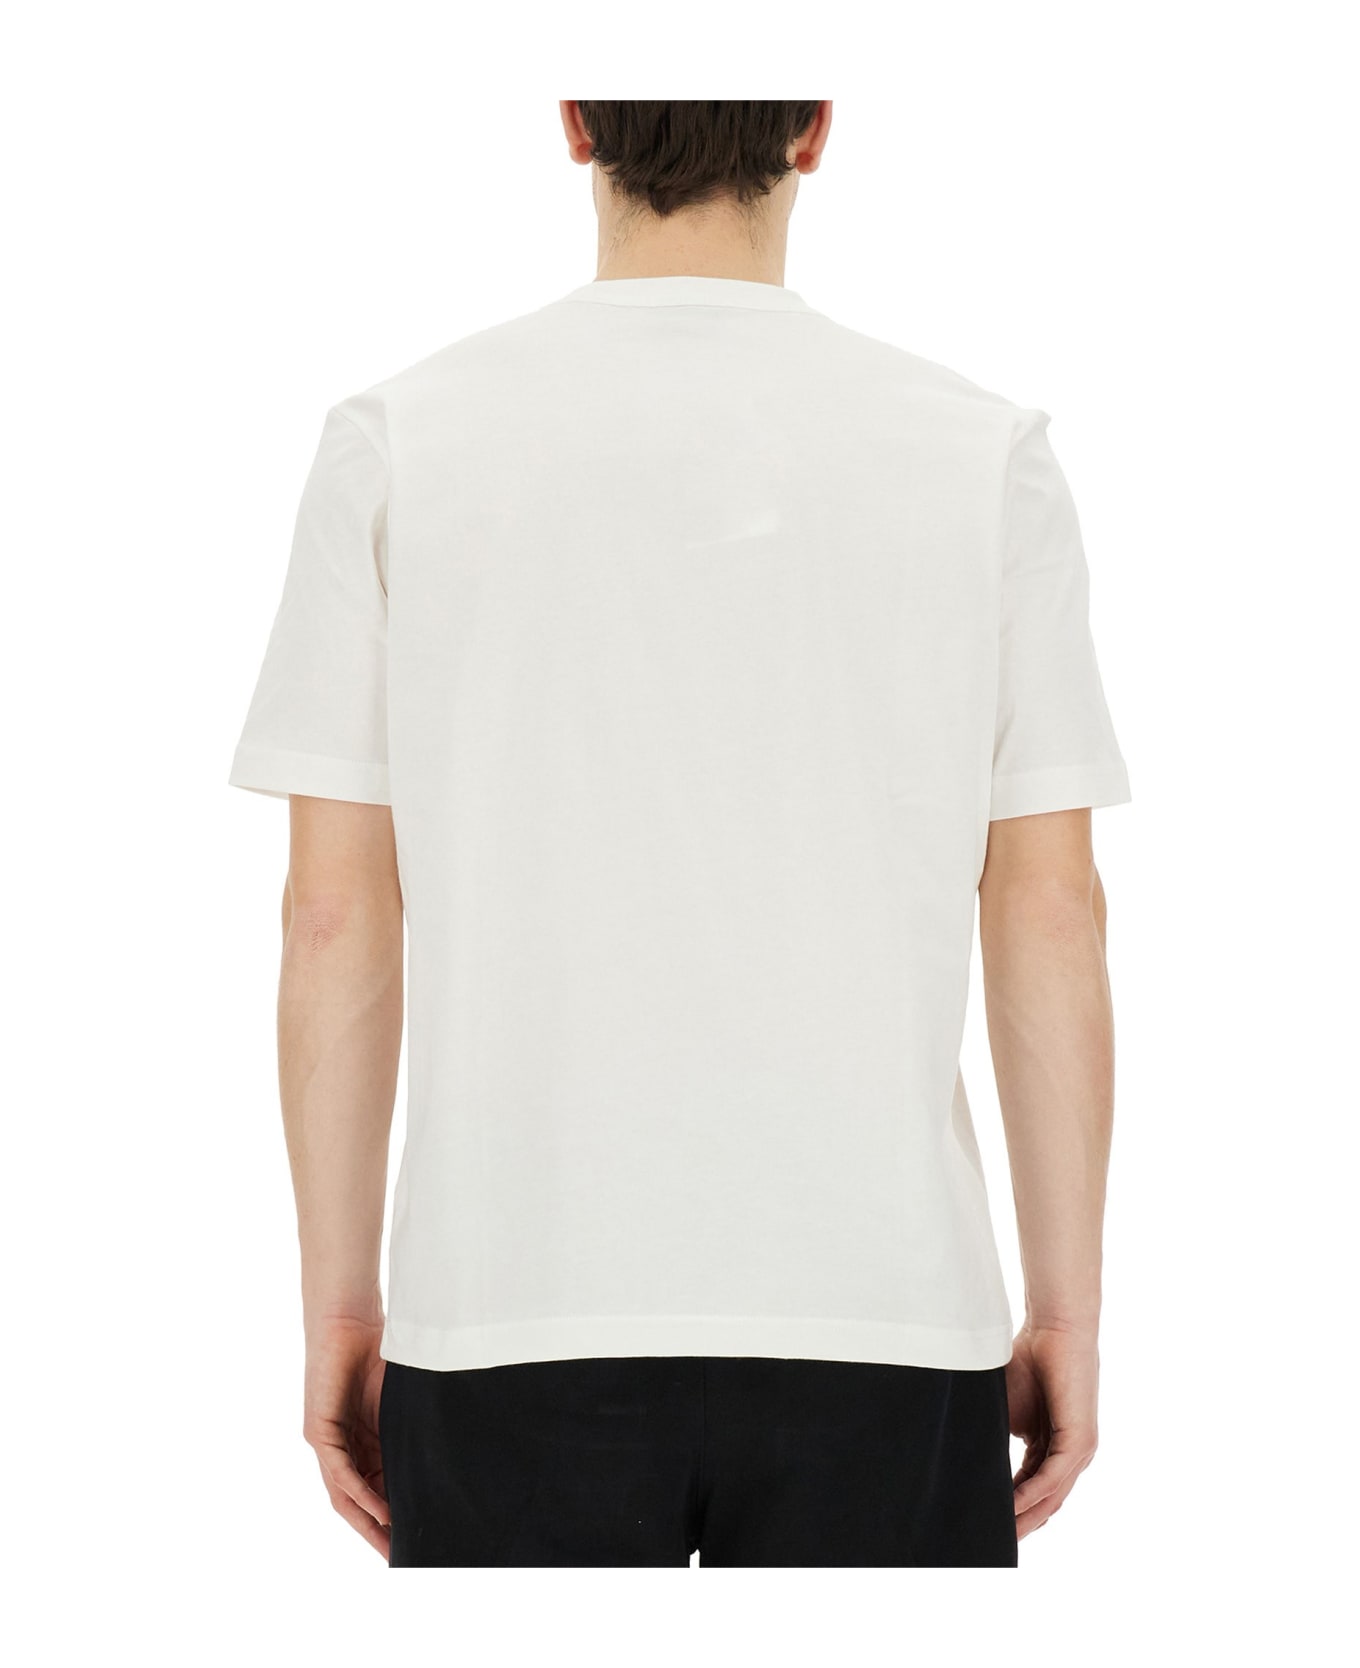 PS by Paul Smith Circles T-shirt - Bianco